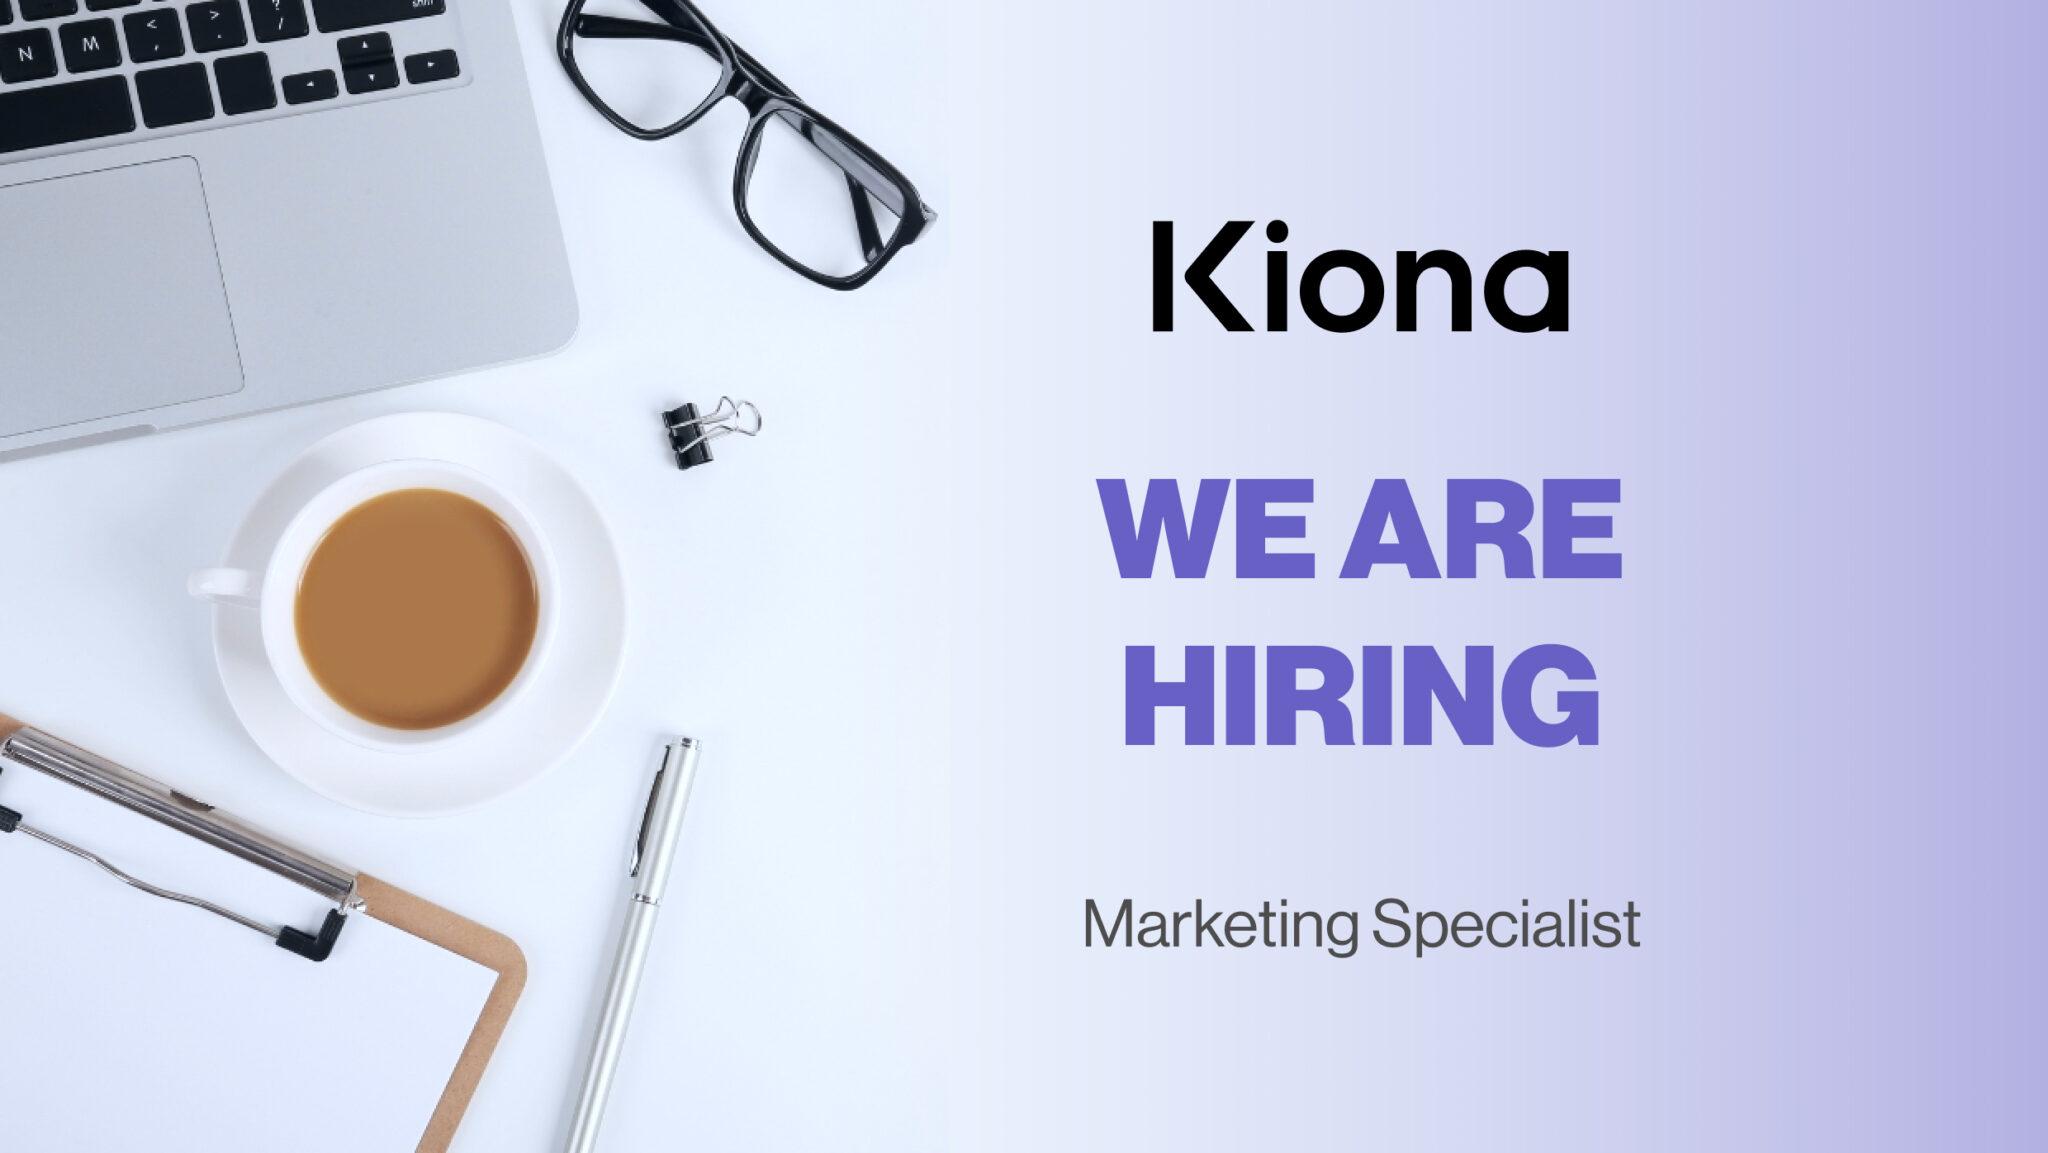 Kiona - We are hiring - Marketing Specialist